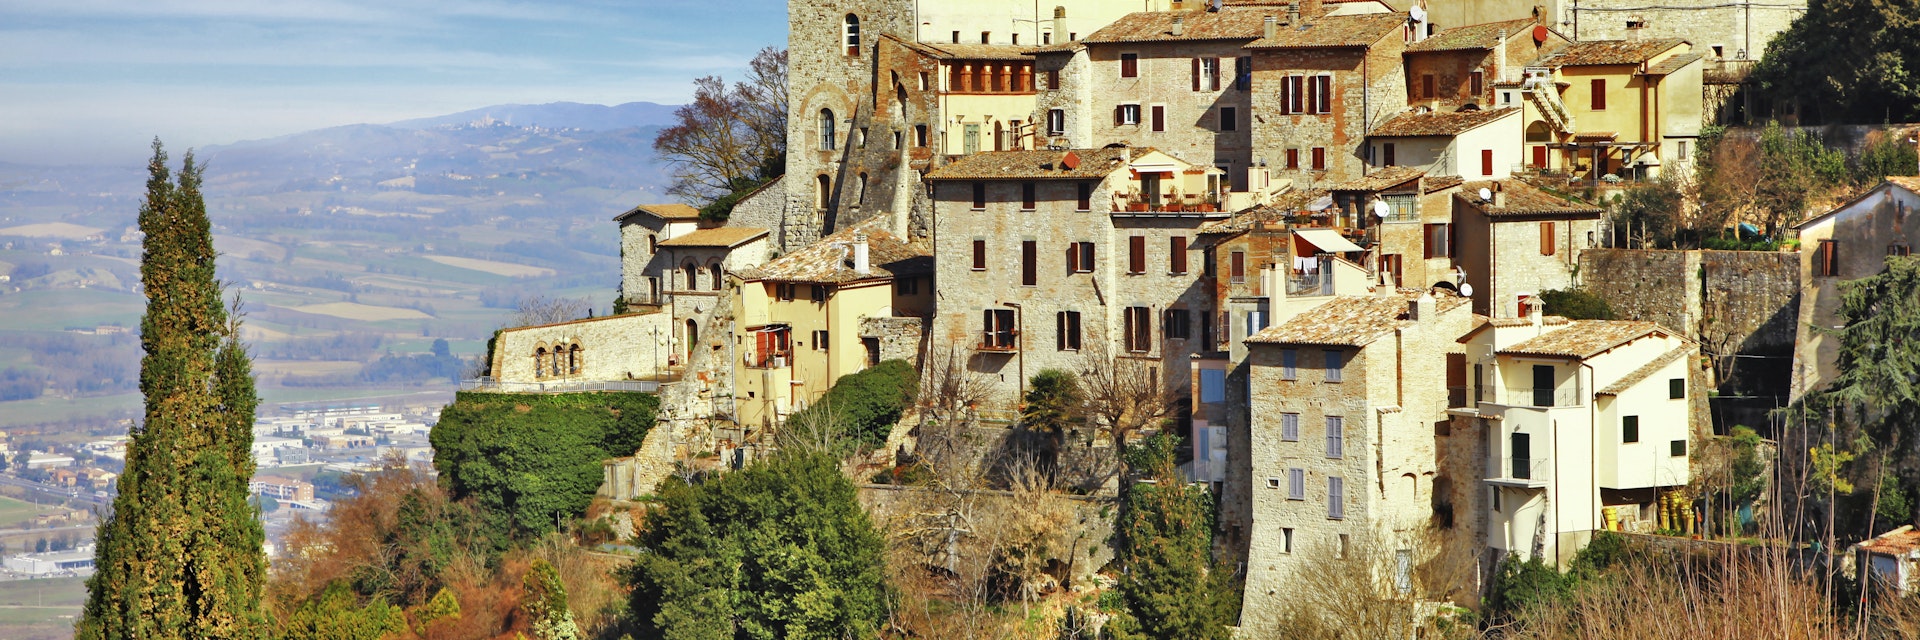 Medieval Town Todi,Umbria,Italy.